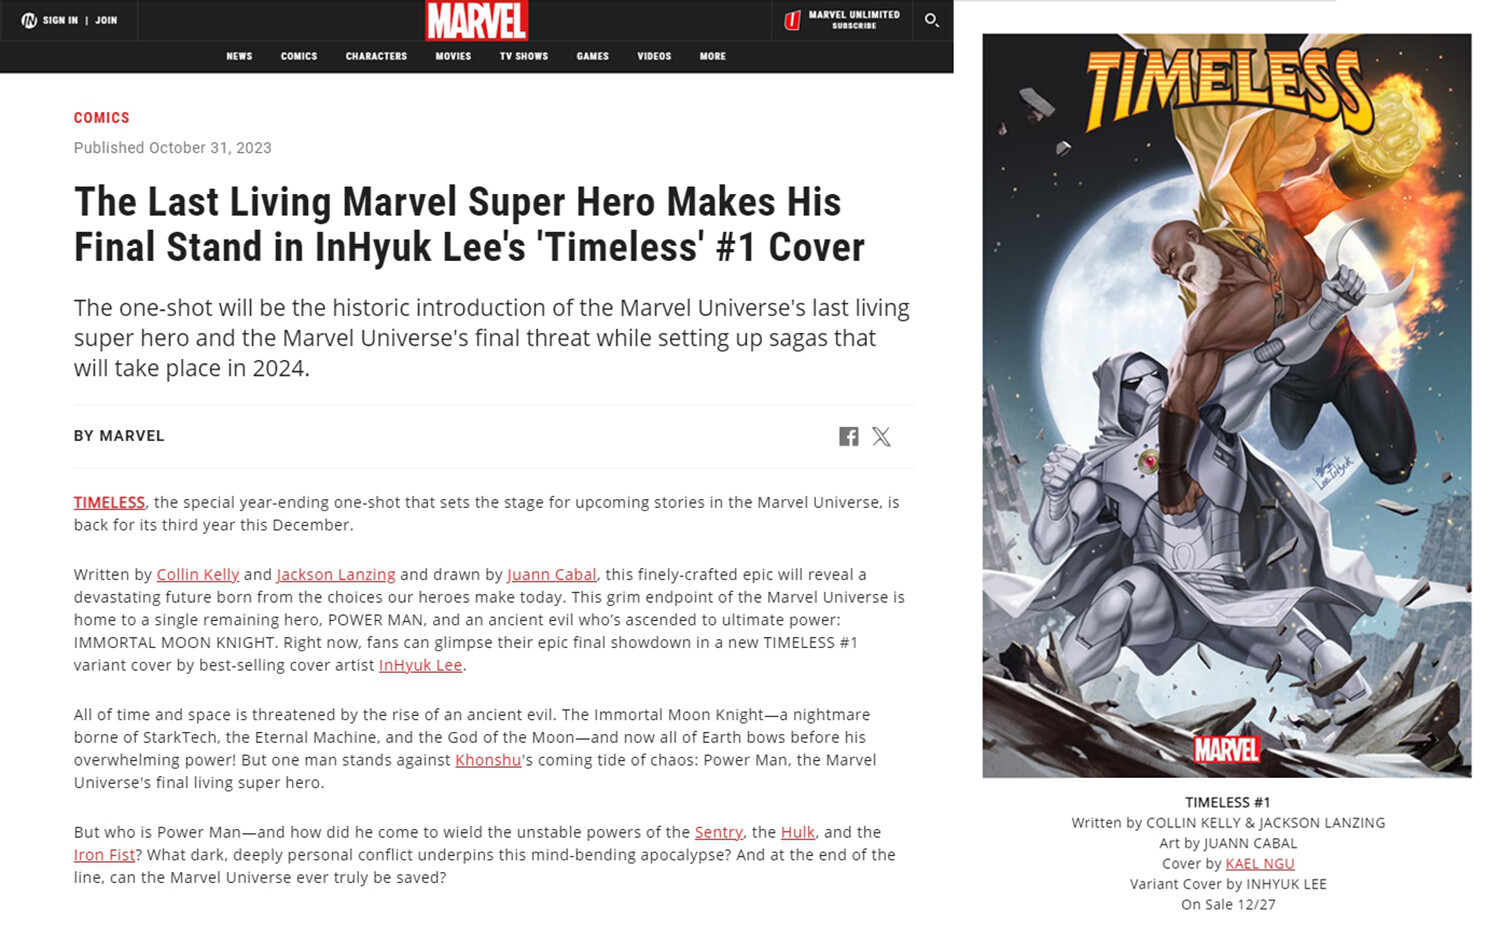 https://www.marvel.com/articles/comics/timeless-1-2023-cover-inhyuk-lee-last-marvel-super-hero-final-stand?linkId=245264583